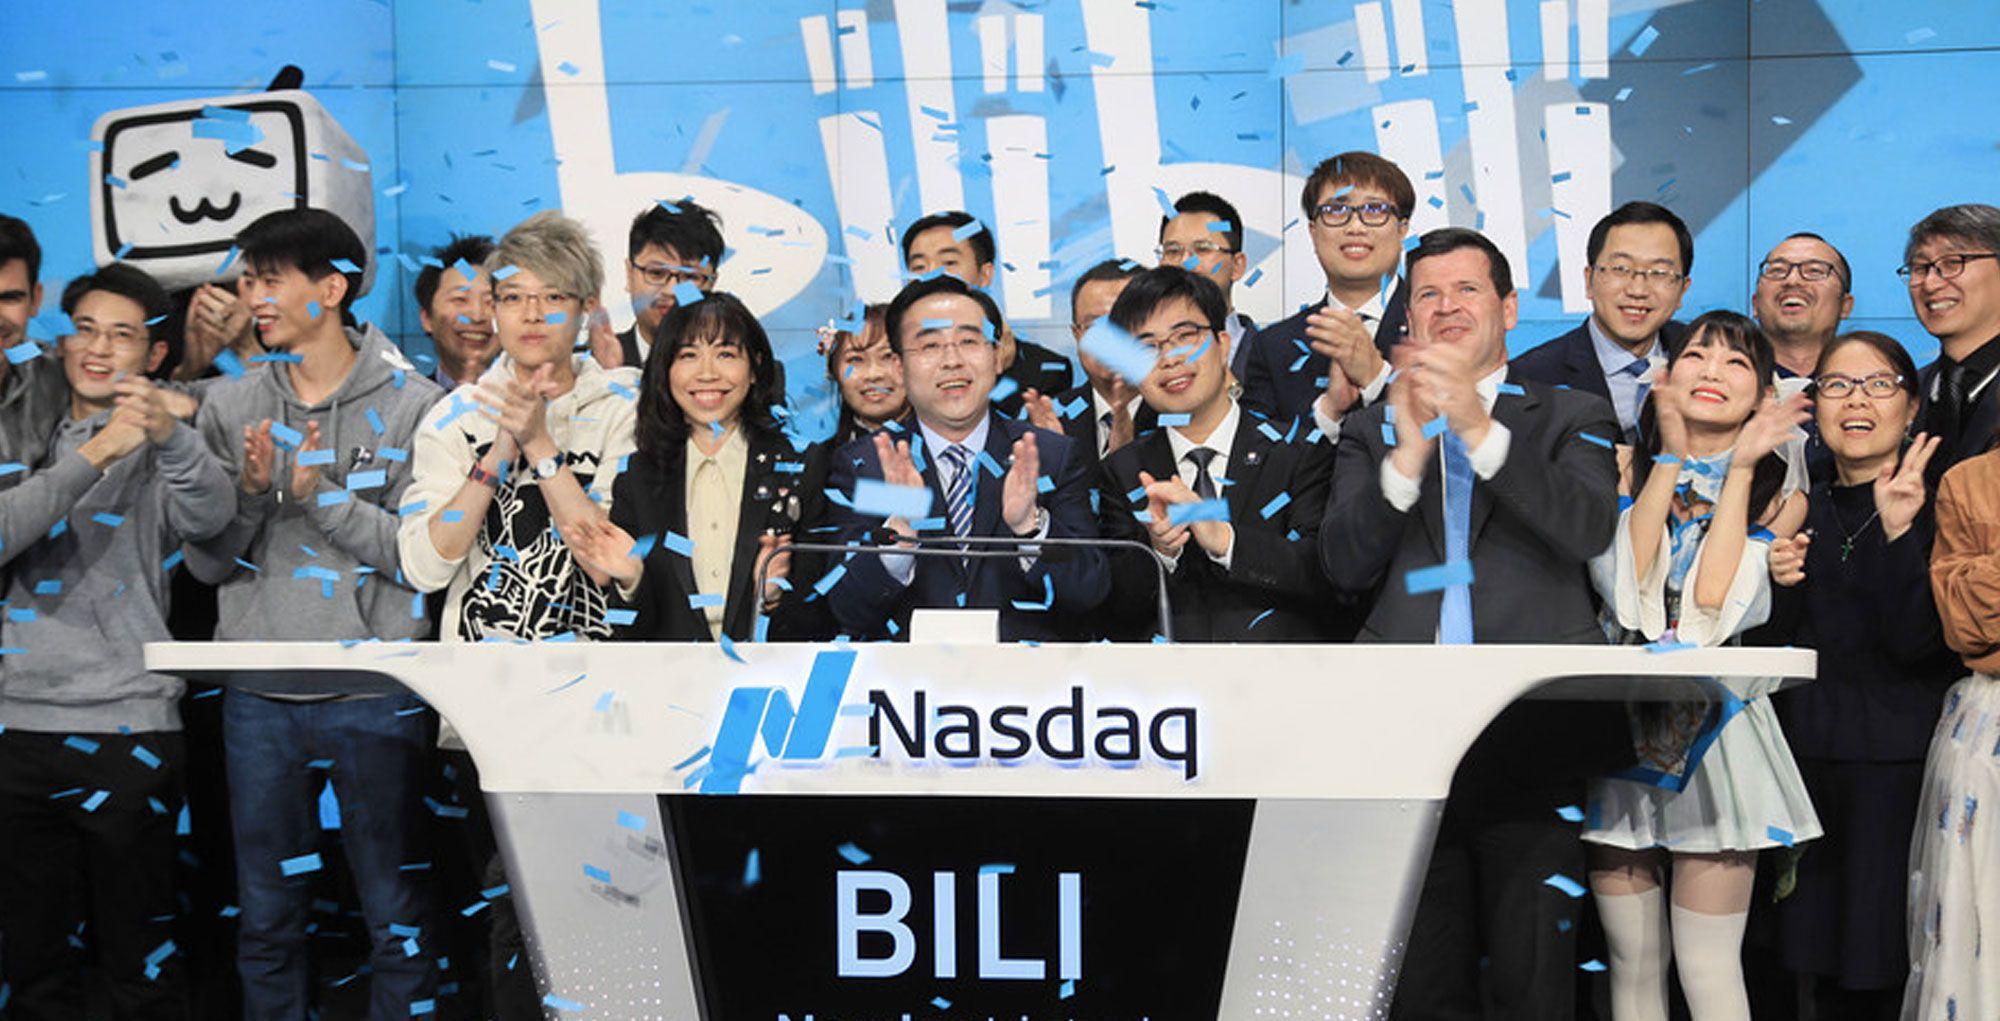 Bili Bili Logo - Alibaba Buys 8 Percent Stake in Popular Chinese Video Platform